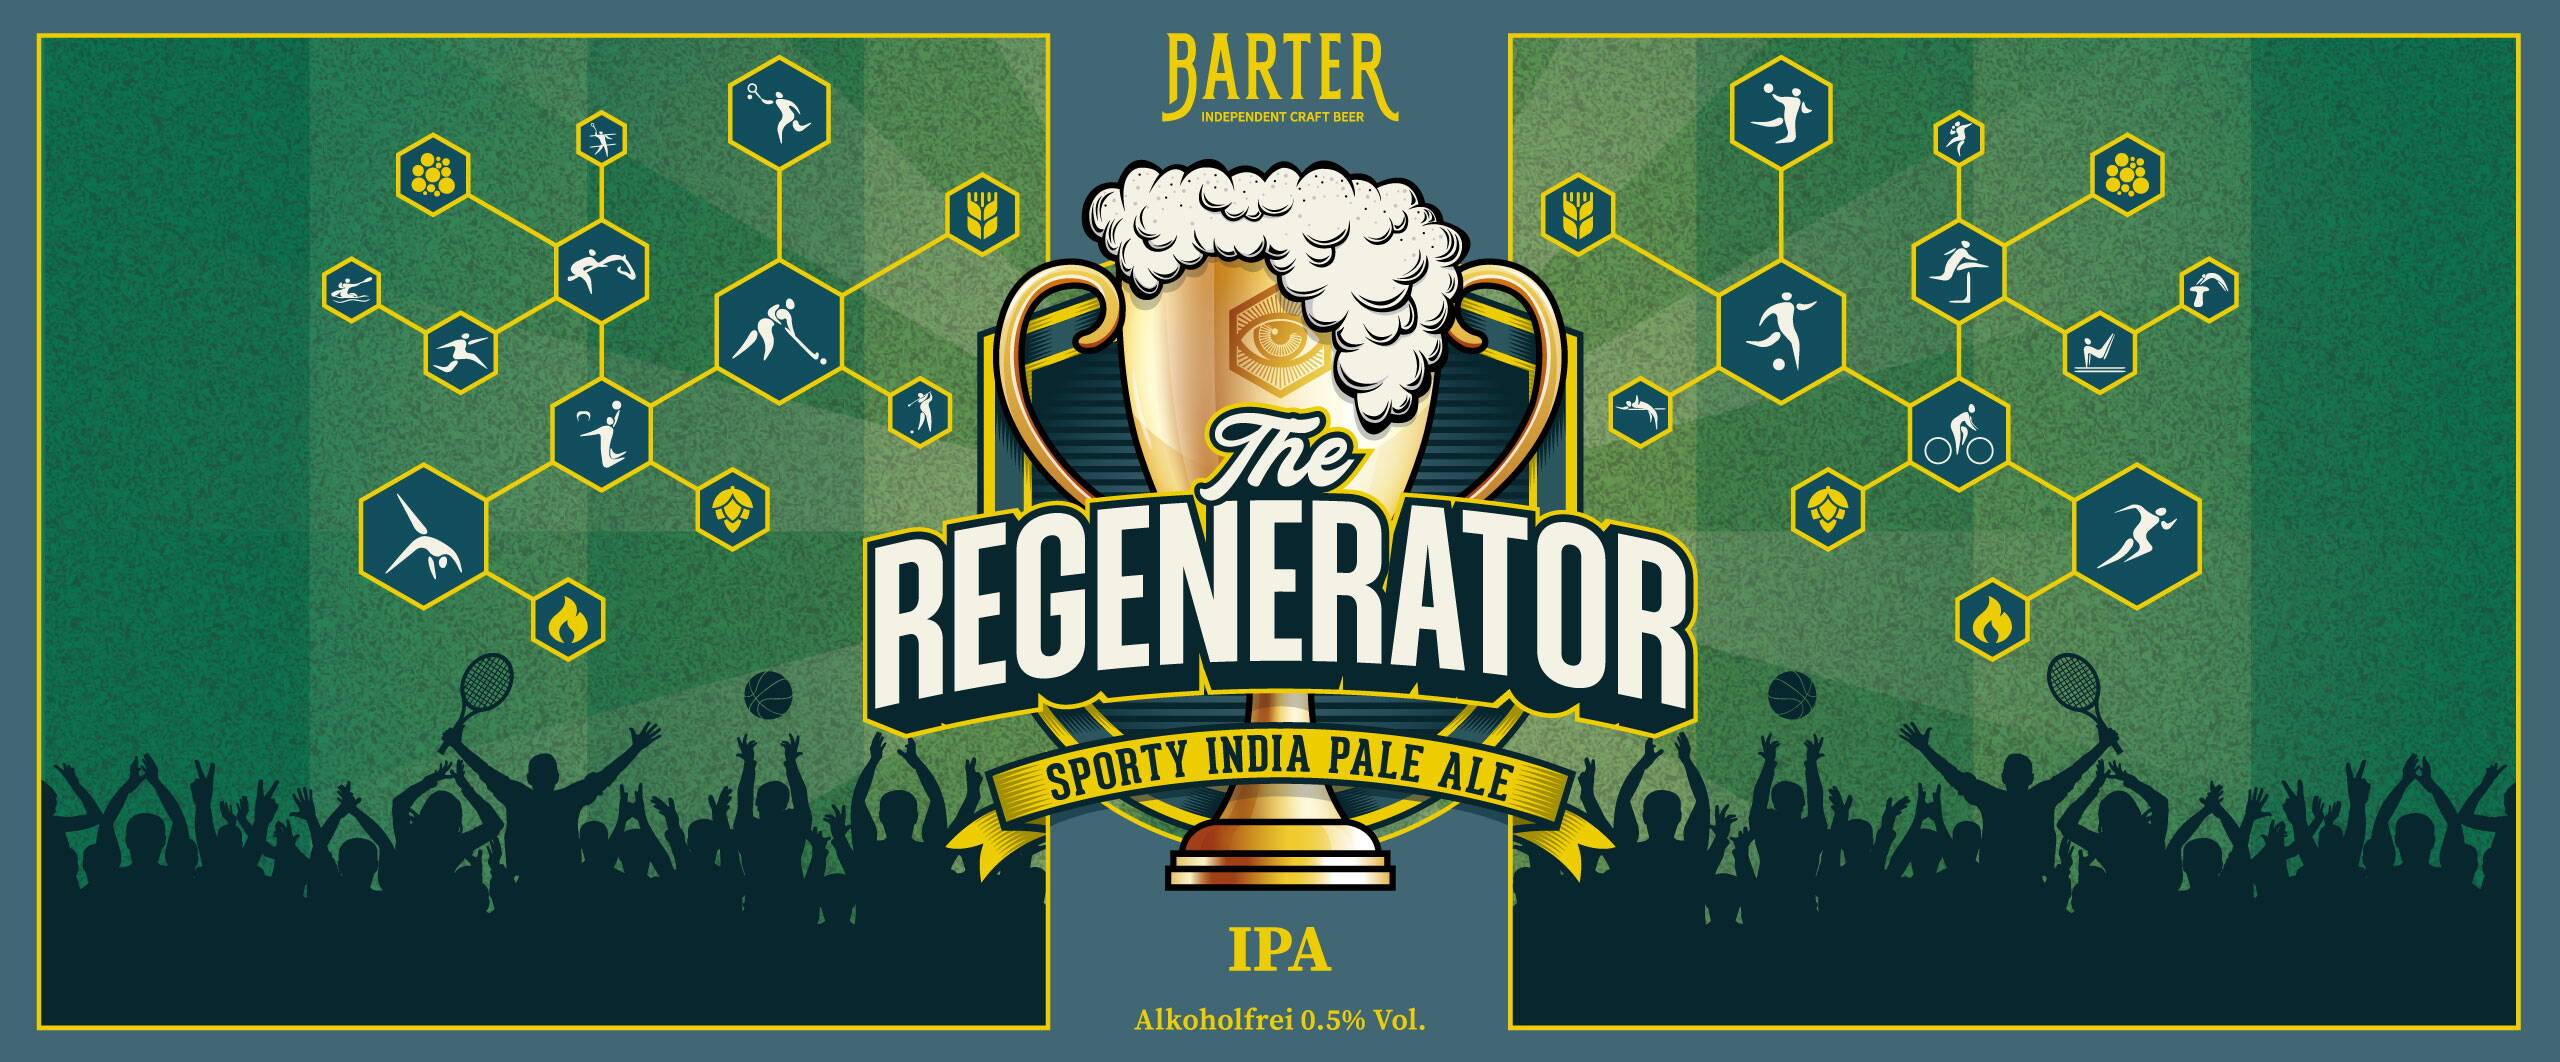 Regenerator – Barter Independent Craft Beer